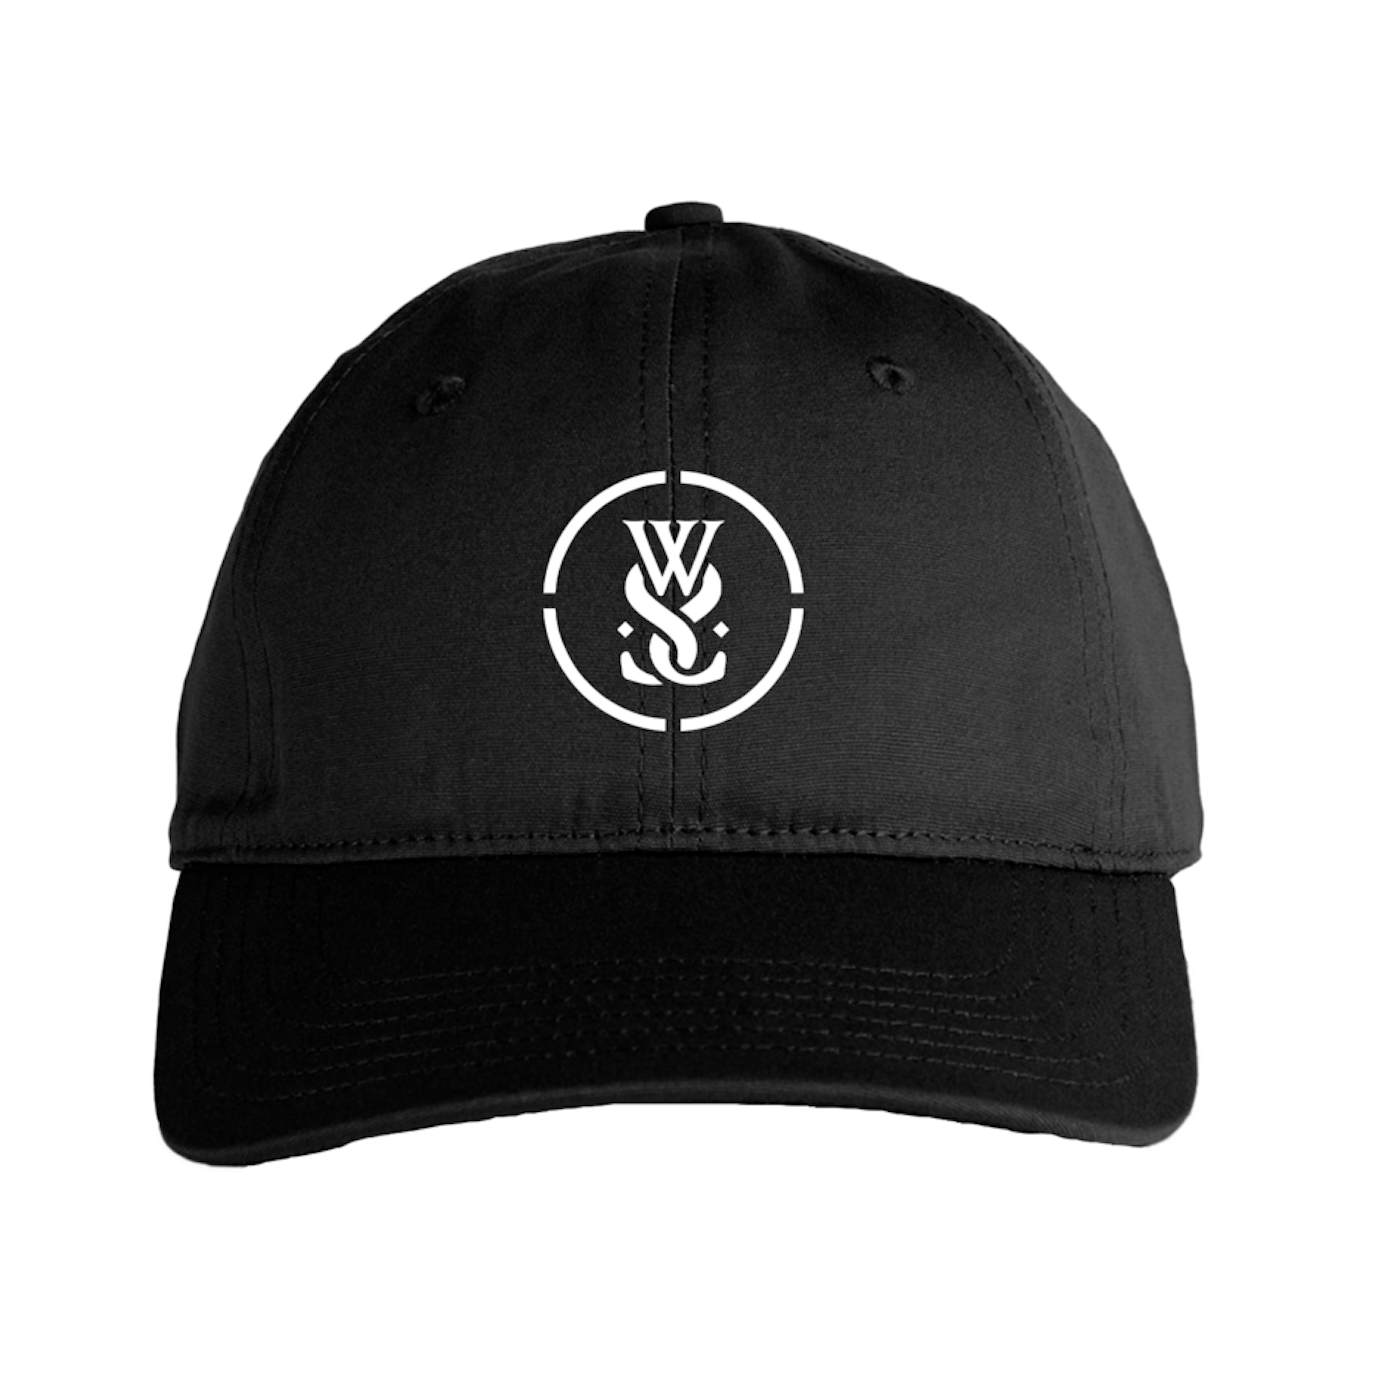 While She Sleeps "WSS Logo" Hat (Black)